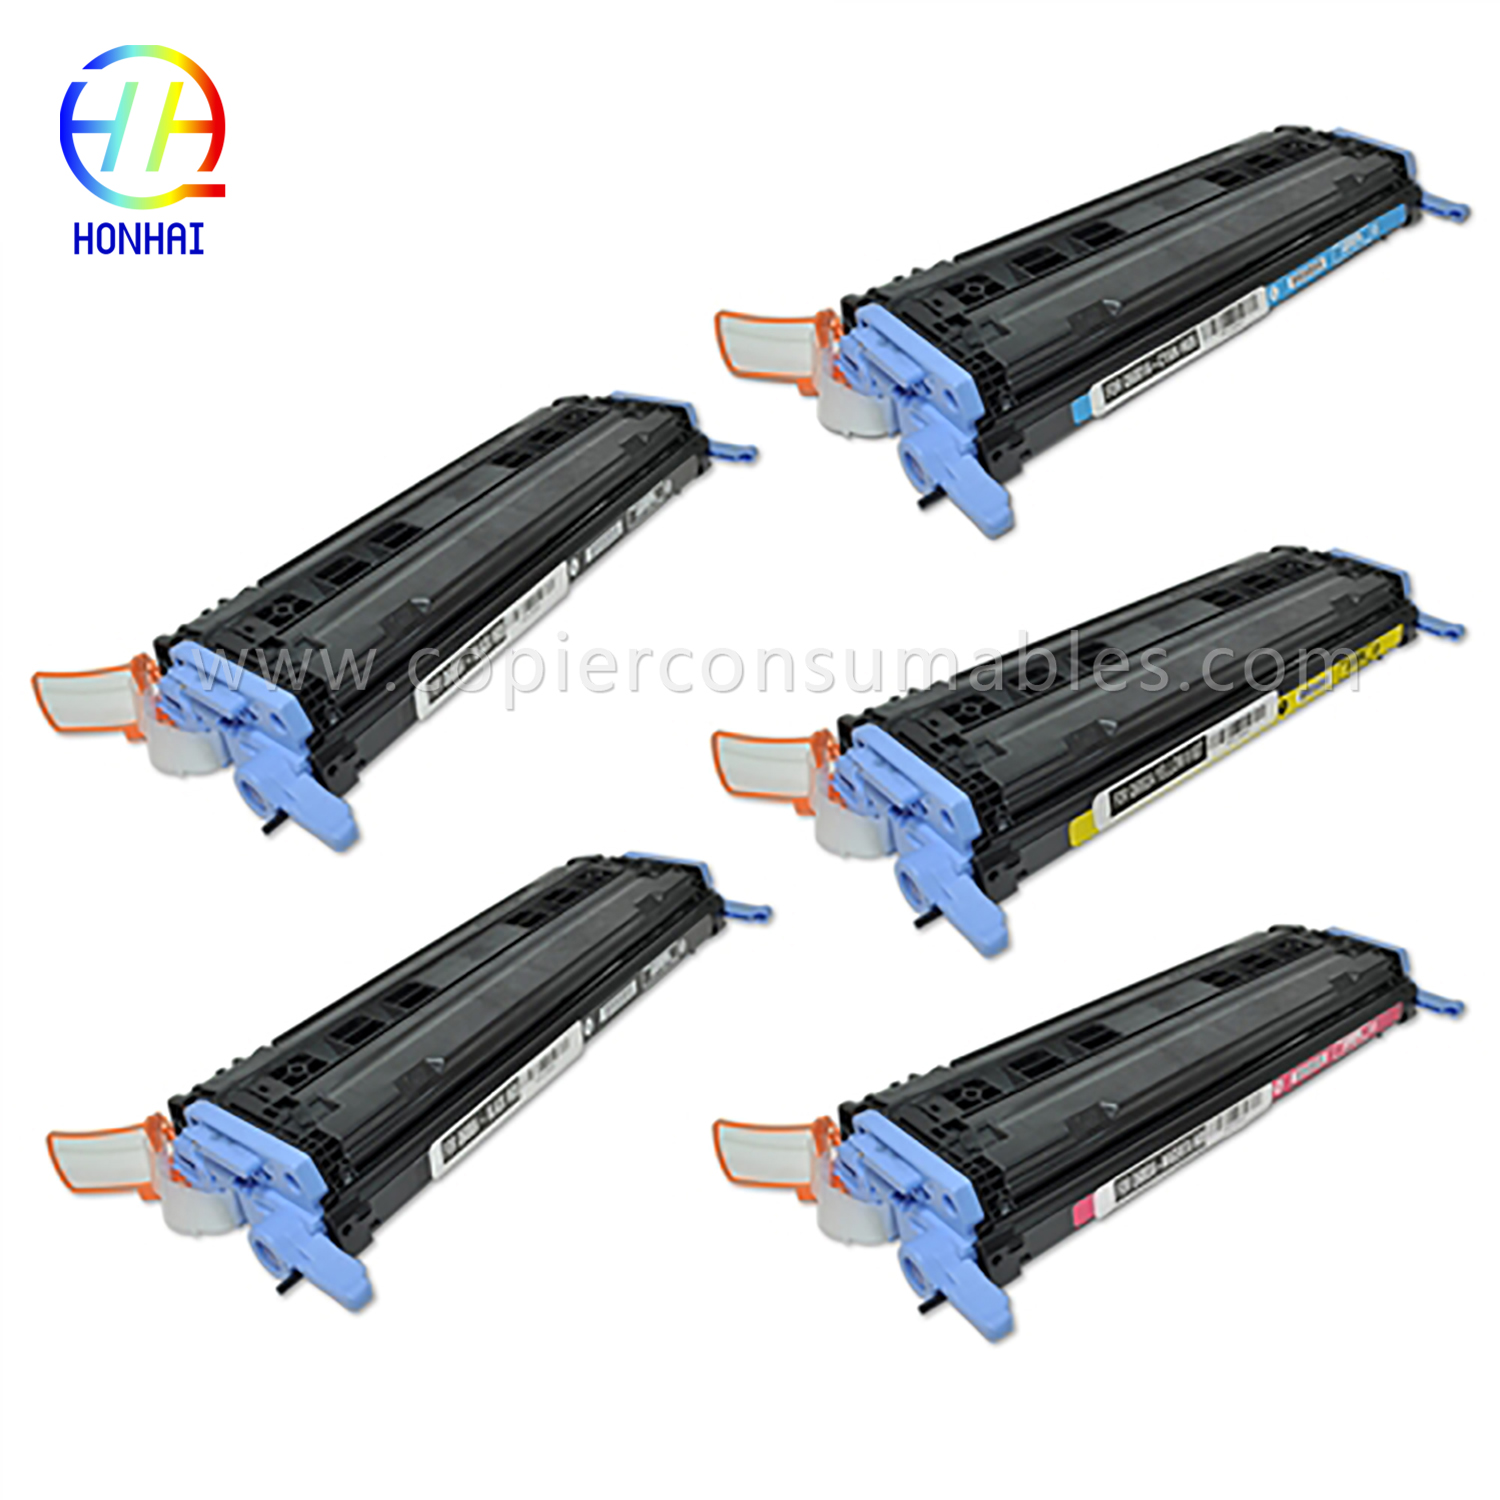 Toner Cartridge para sa HP Laserjet 1600 2600 2605 Cm1015mfp Cm1017mfp (Q6000A Q6001A Q6002A Q6003A)